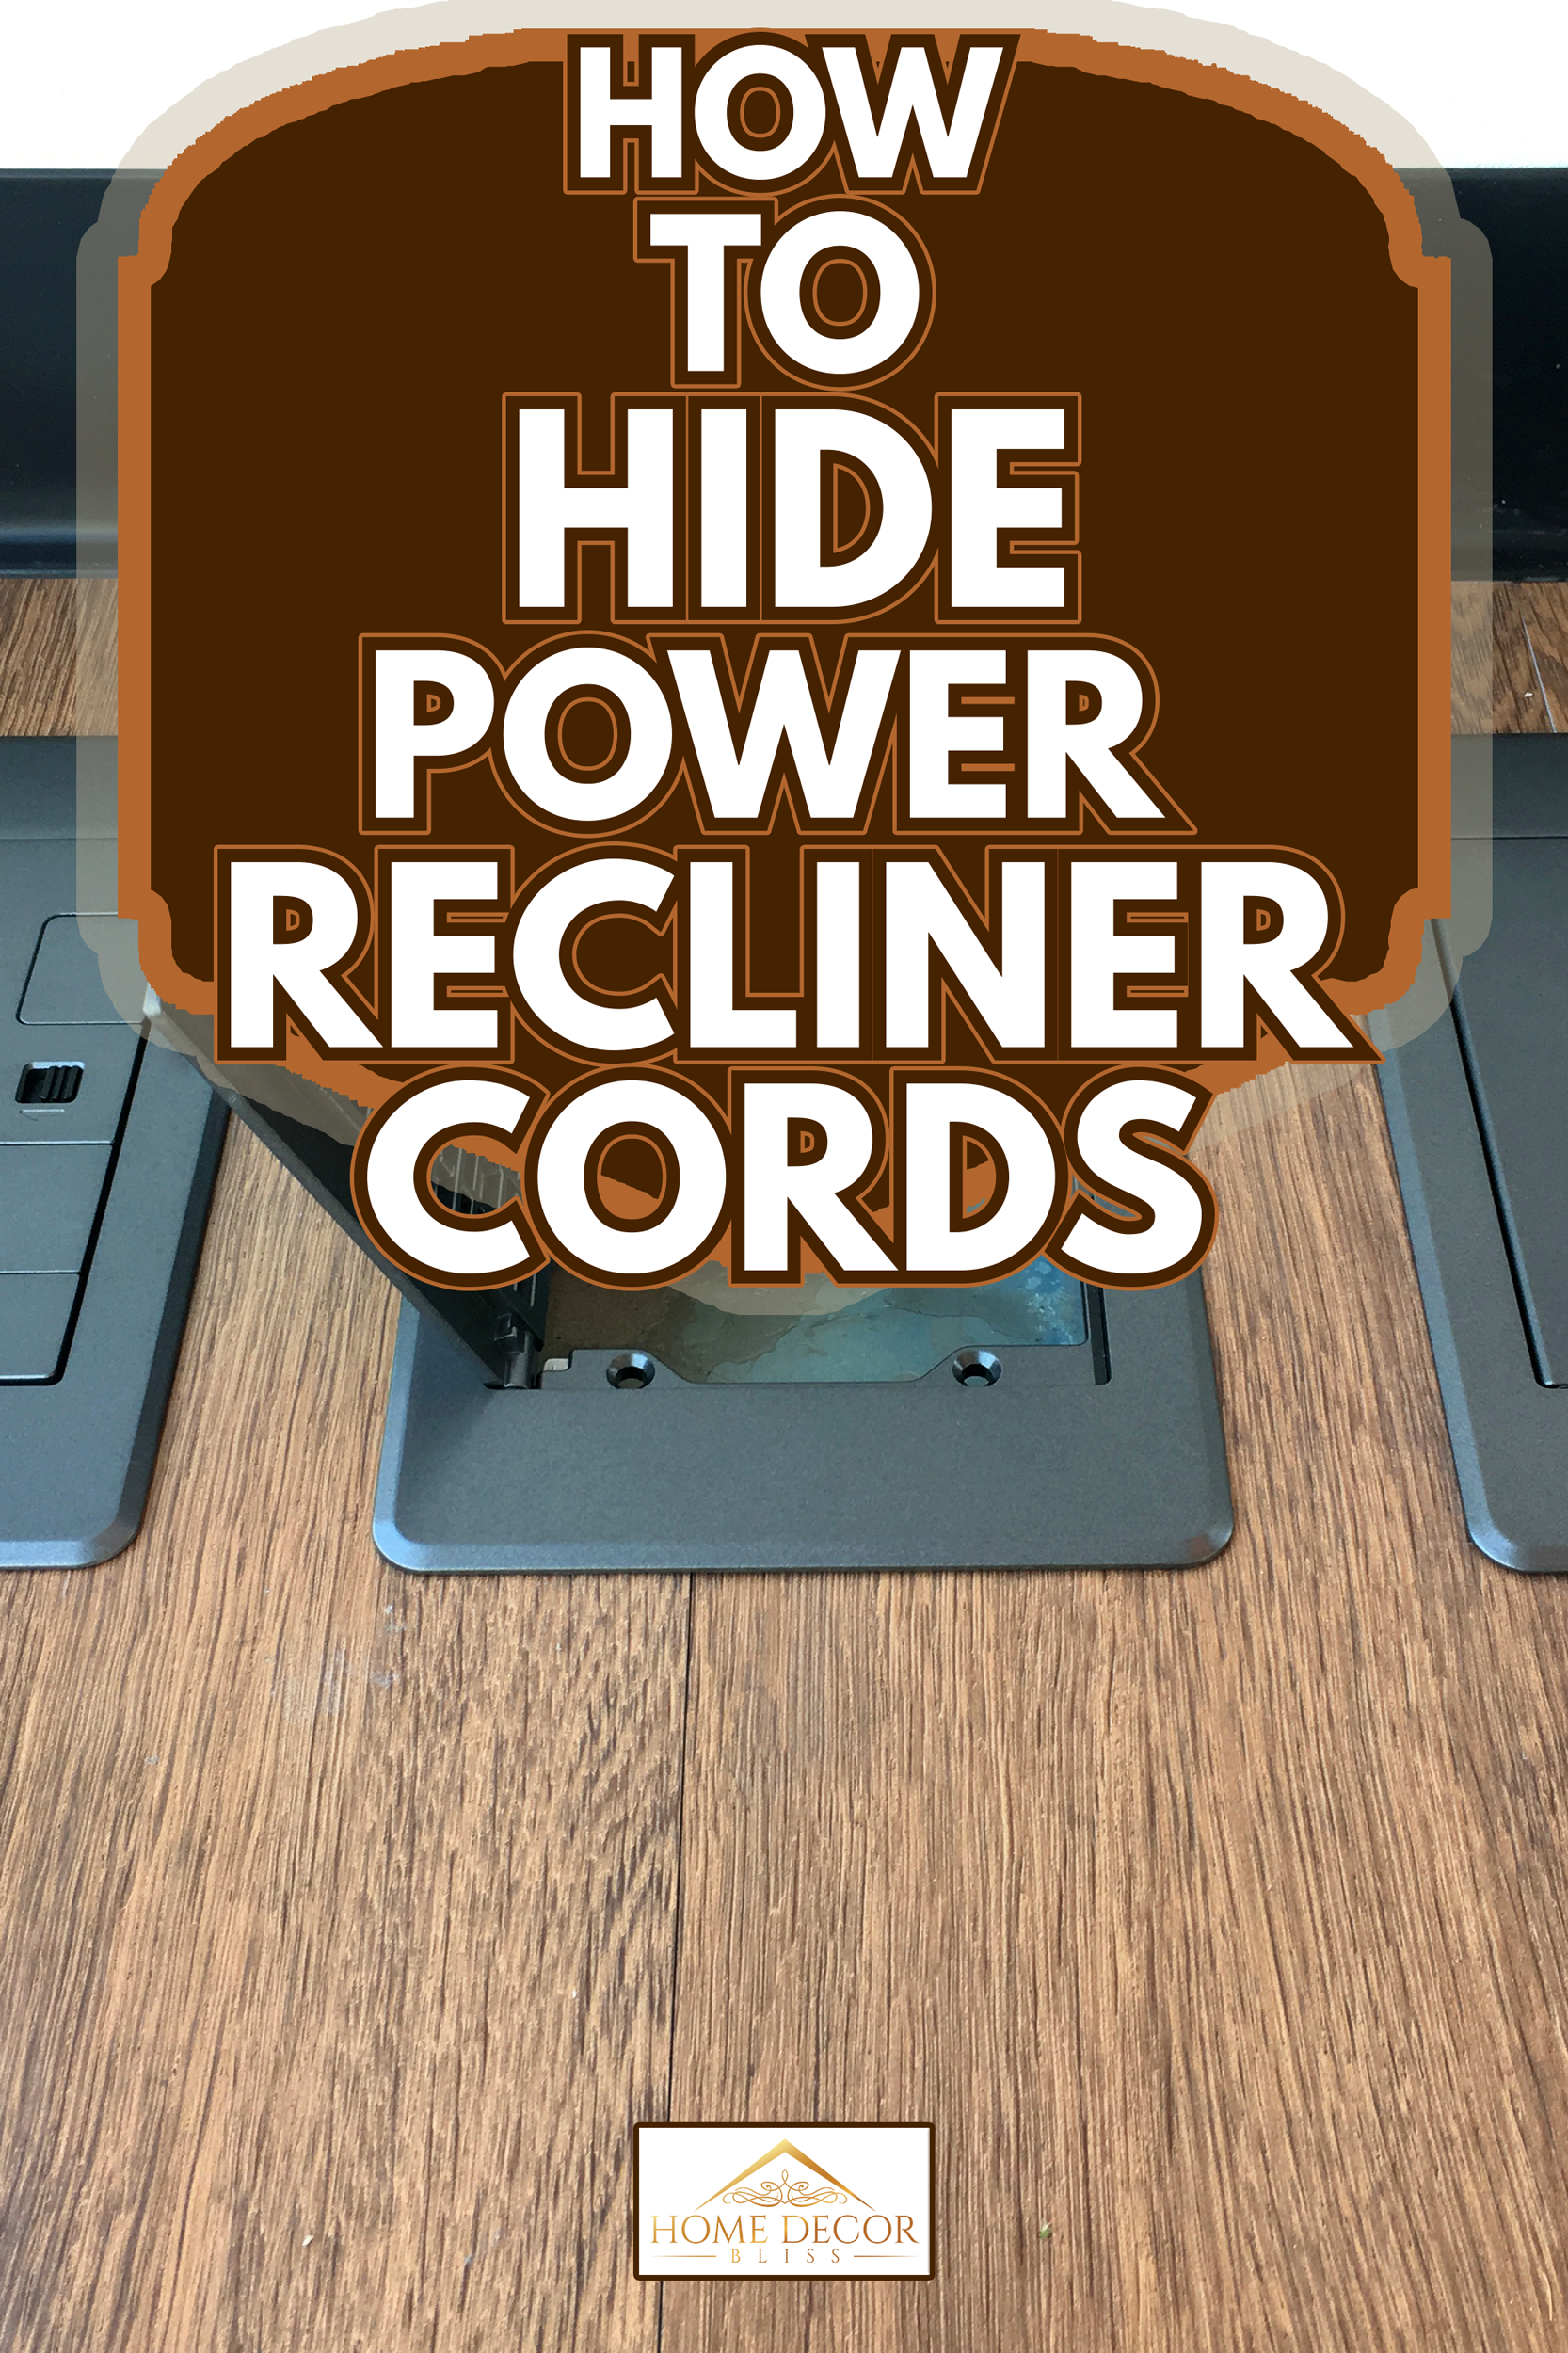 Floor plug,pop up plug in metal cover installed in wooden floor.Electrical work.System engineering - How To Hide Power Recliner Cords